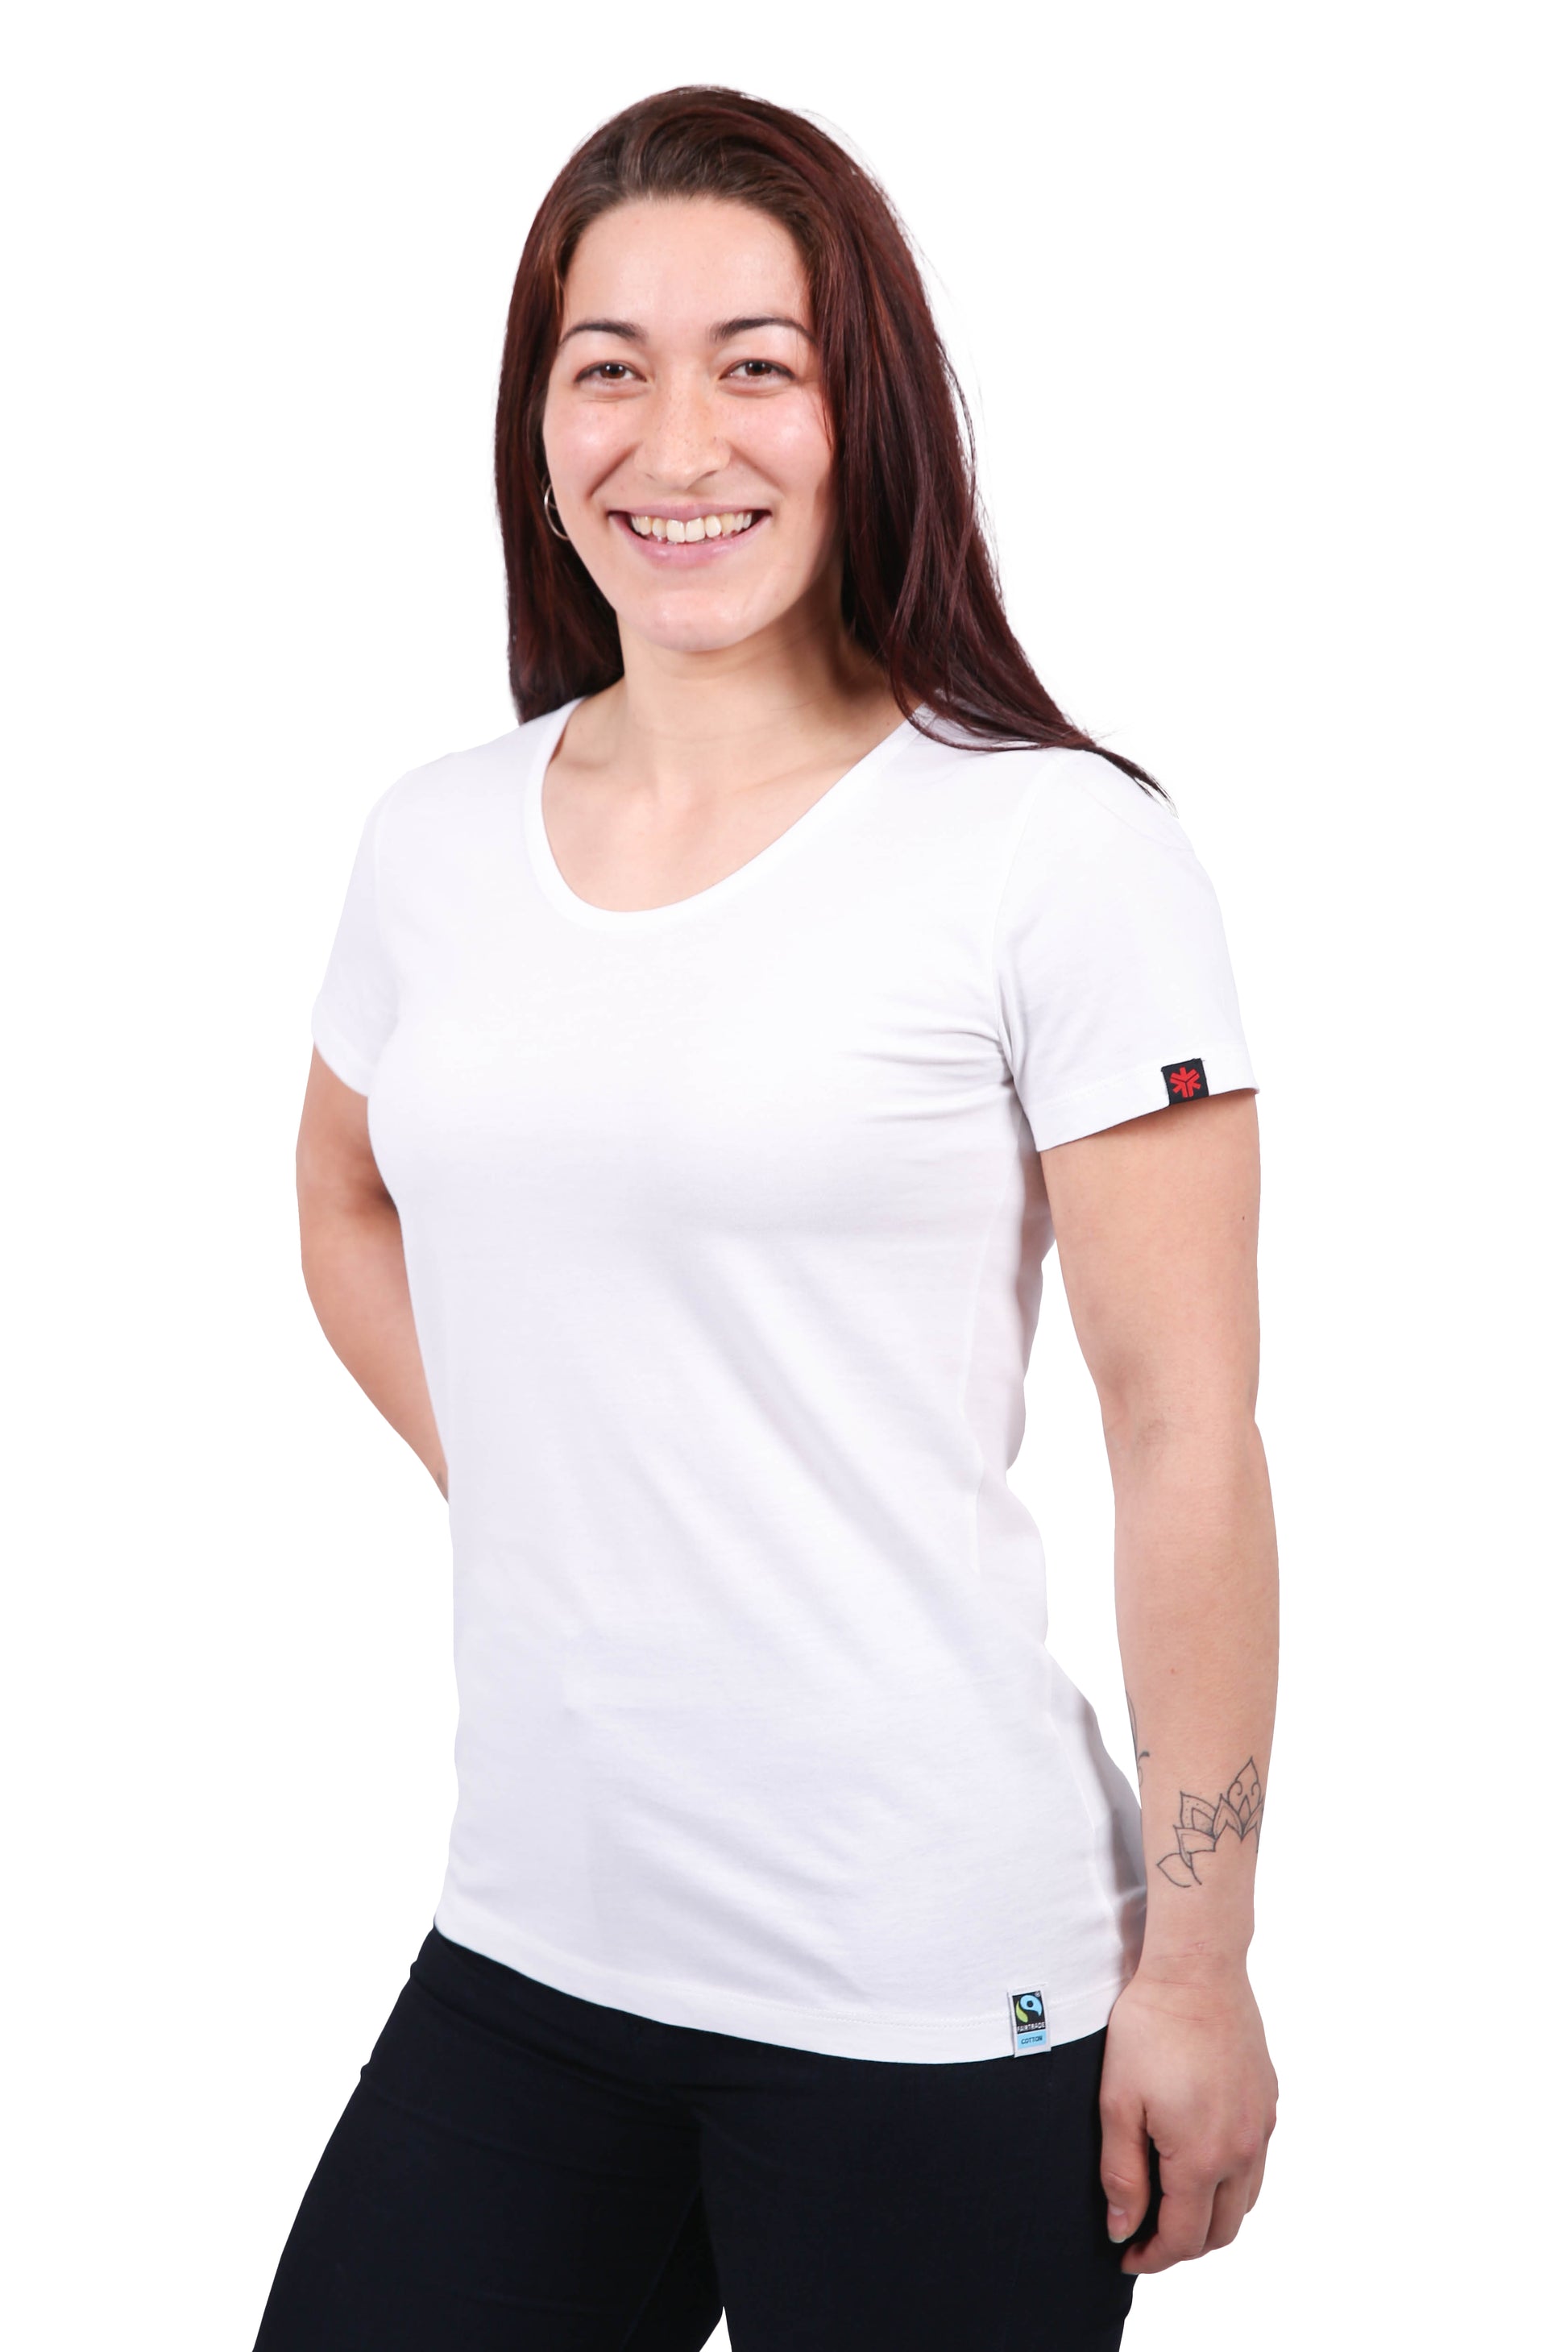 Etiko Fairtrade Certified Organic Cotton White Womens Round Neck T-Shirt Bundle, Eco-Friendly